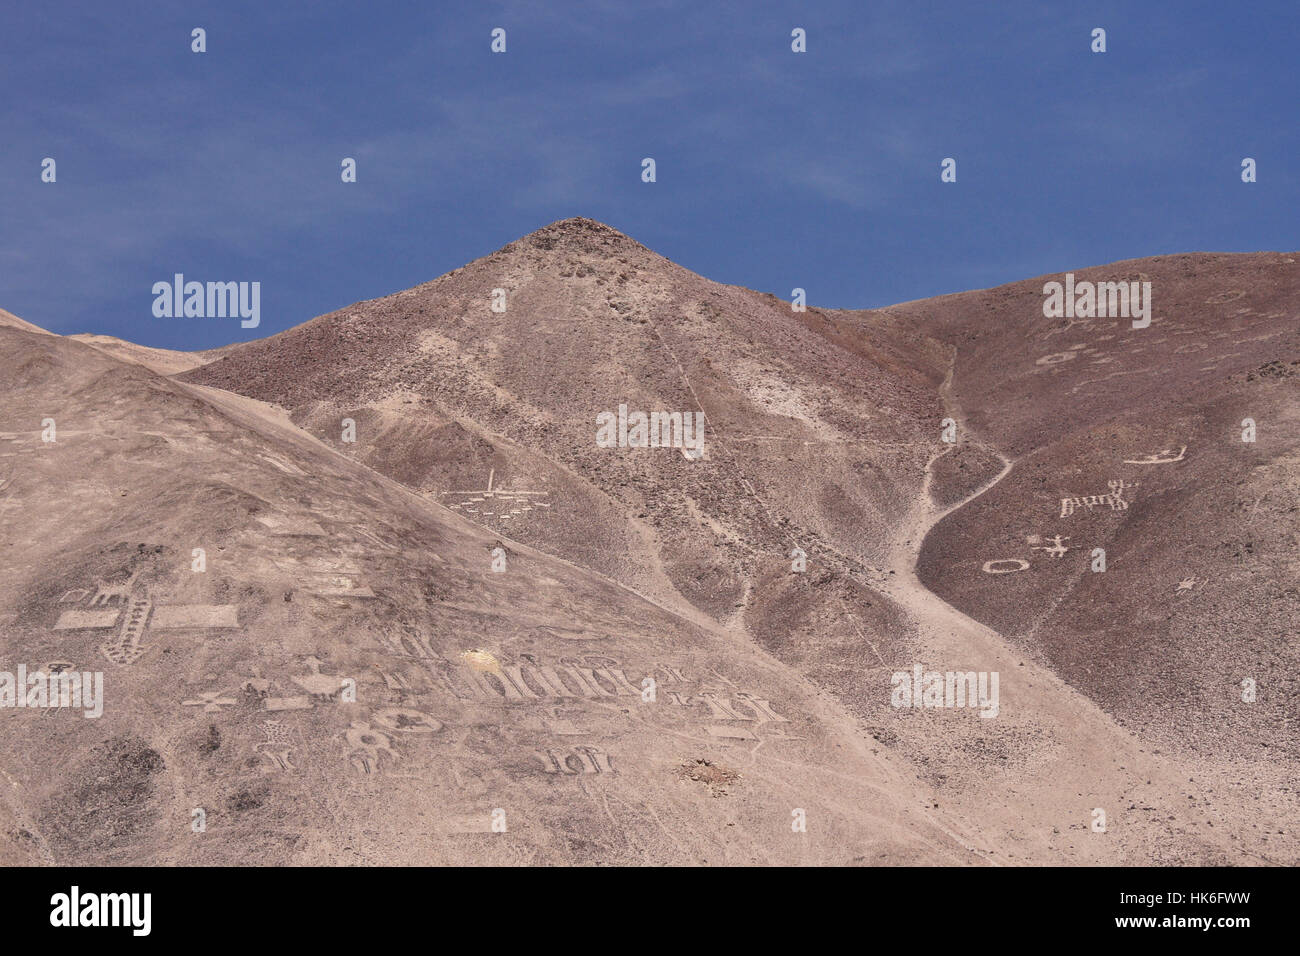 Cerros Pintados geoglifi sulla collina, Reserva Nacional Pampa del Tamarugal, il Deserto di Atacama, Norte Grande del Cile Foto Stock